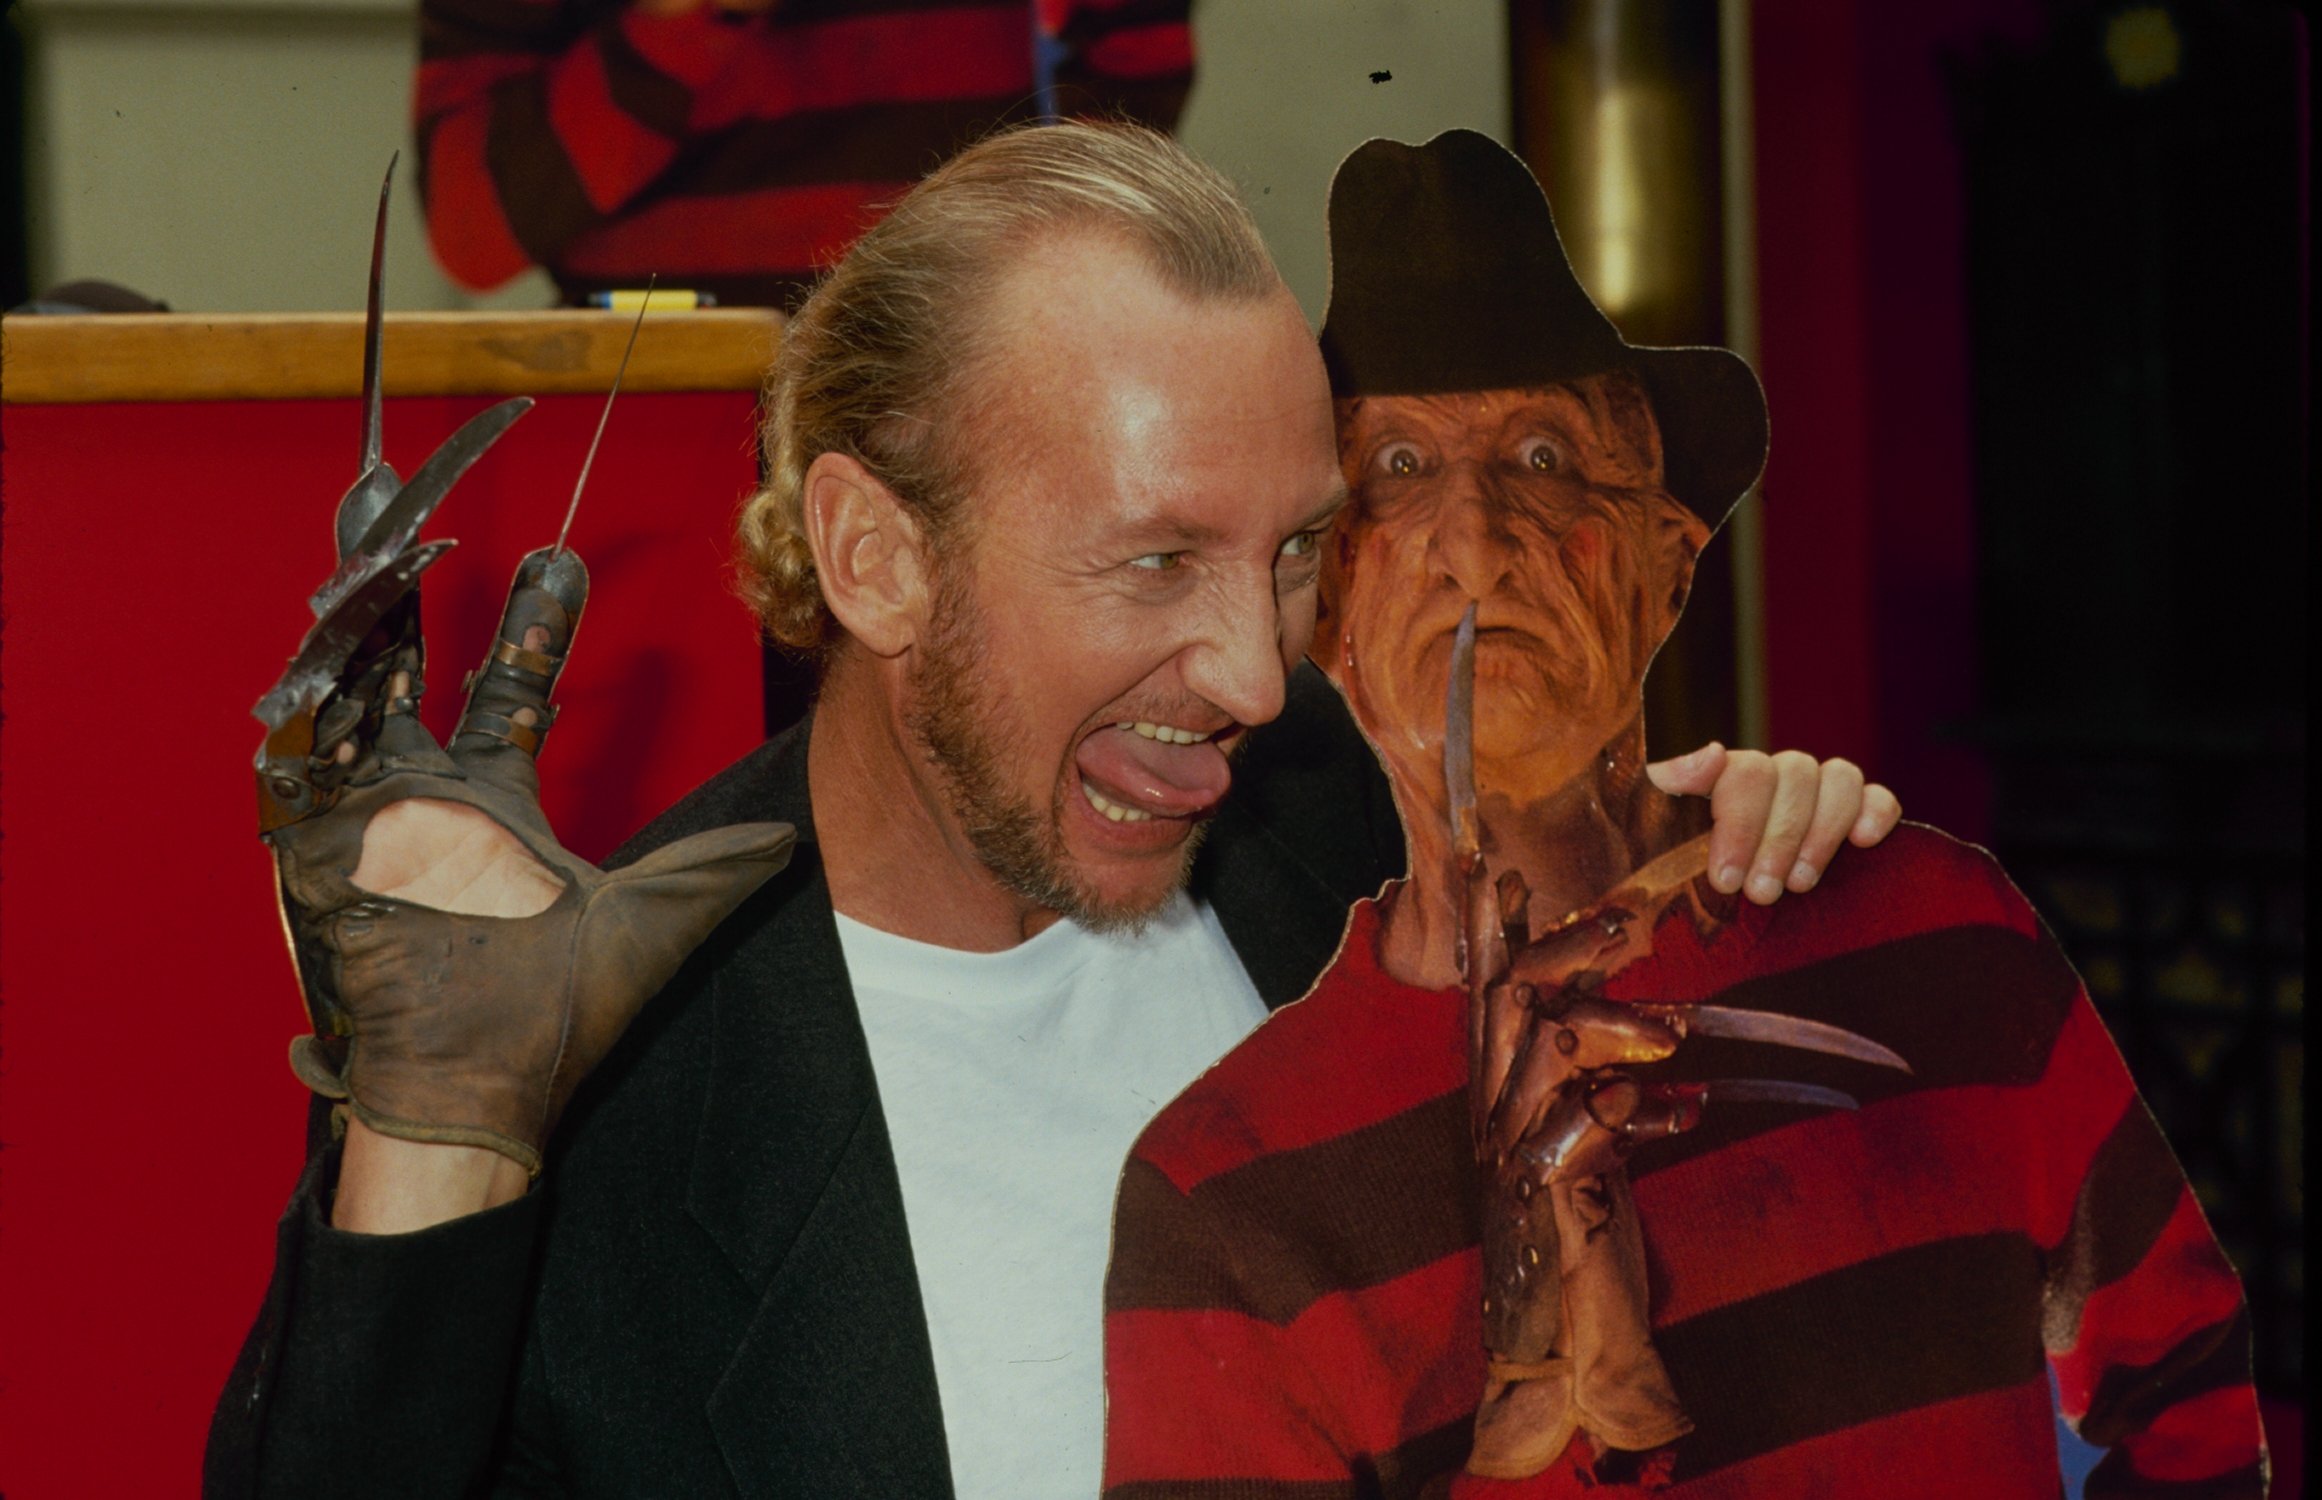 Robert Englund poses with Freddy Krueger cutout